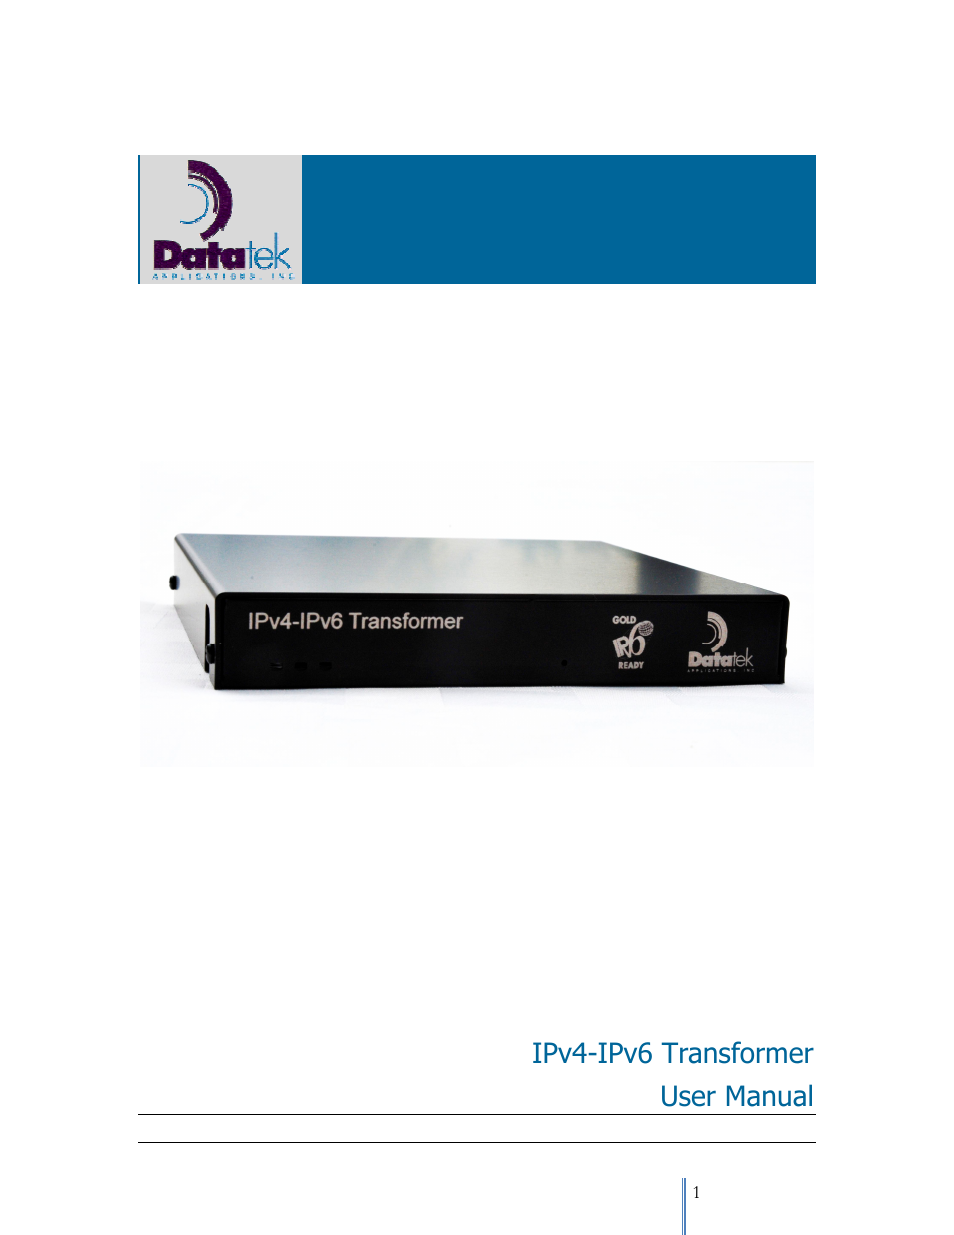 IPv6 Transformer User Manual